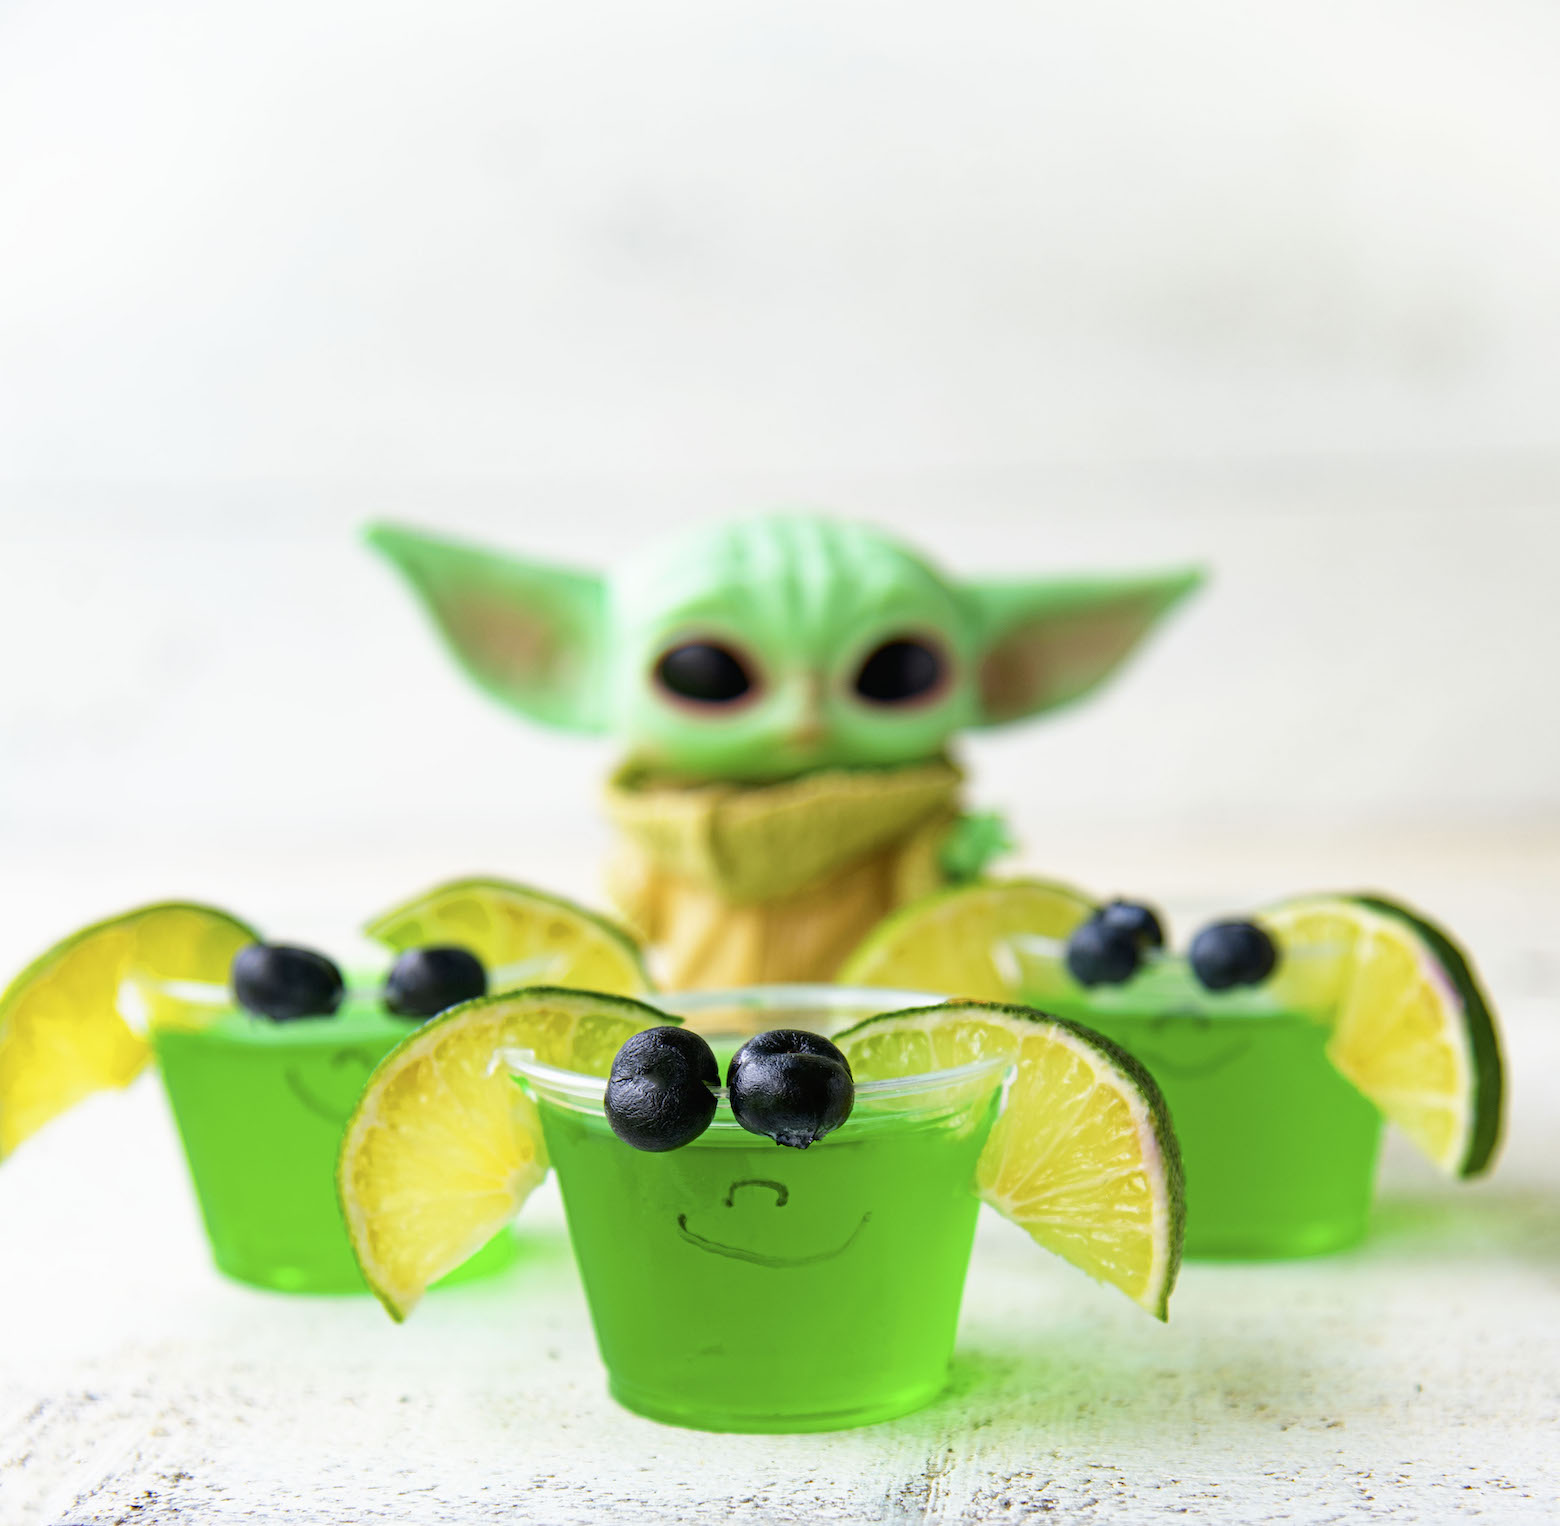 Three Baby Yoda Jello Shots with blurred Grogu figurine behind them.